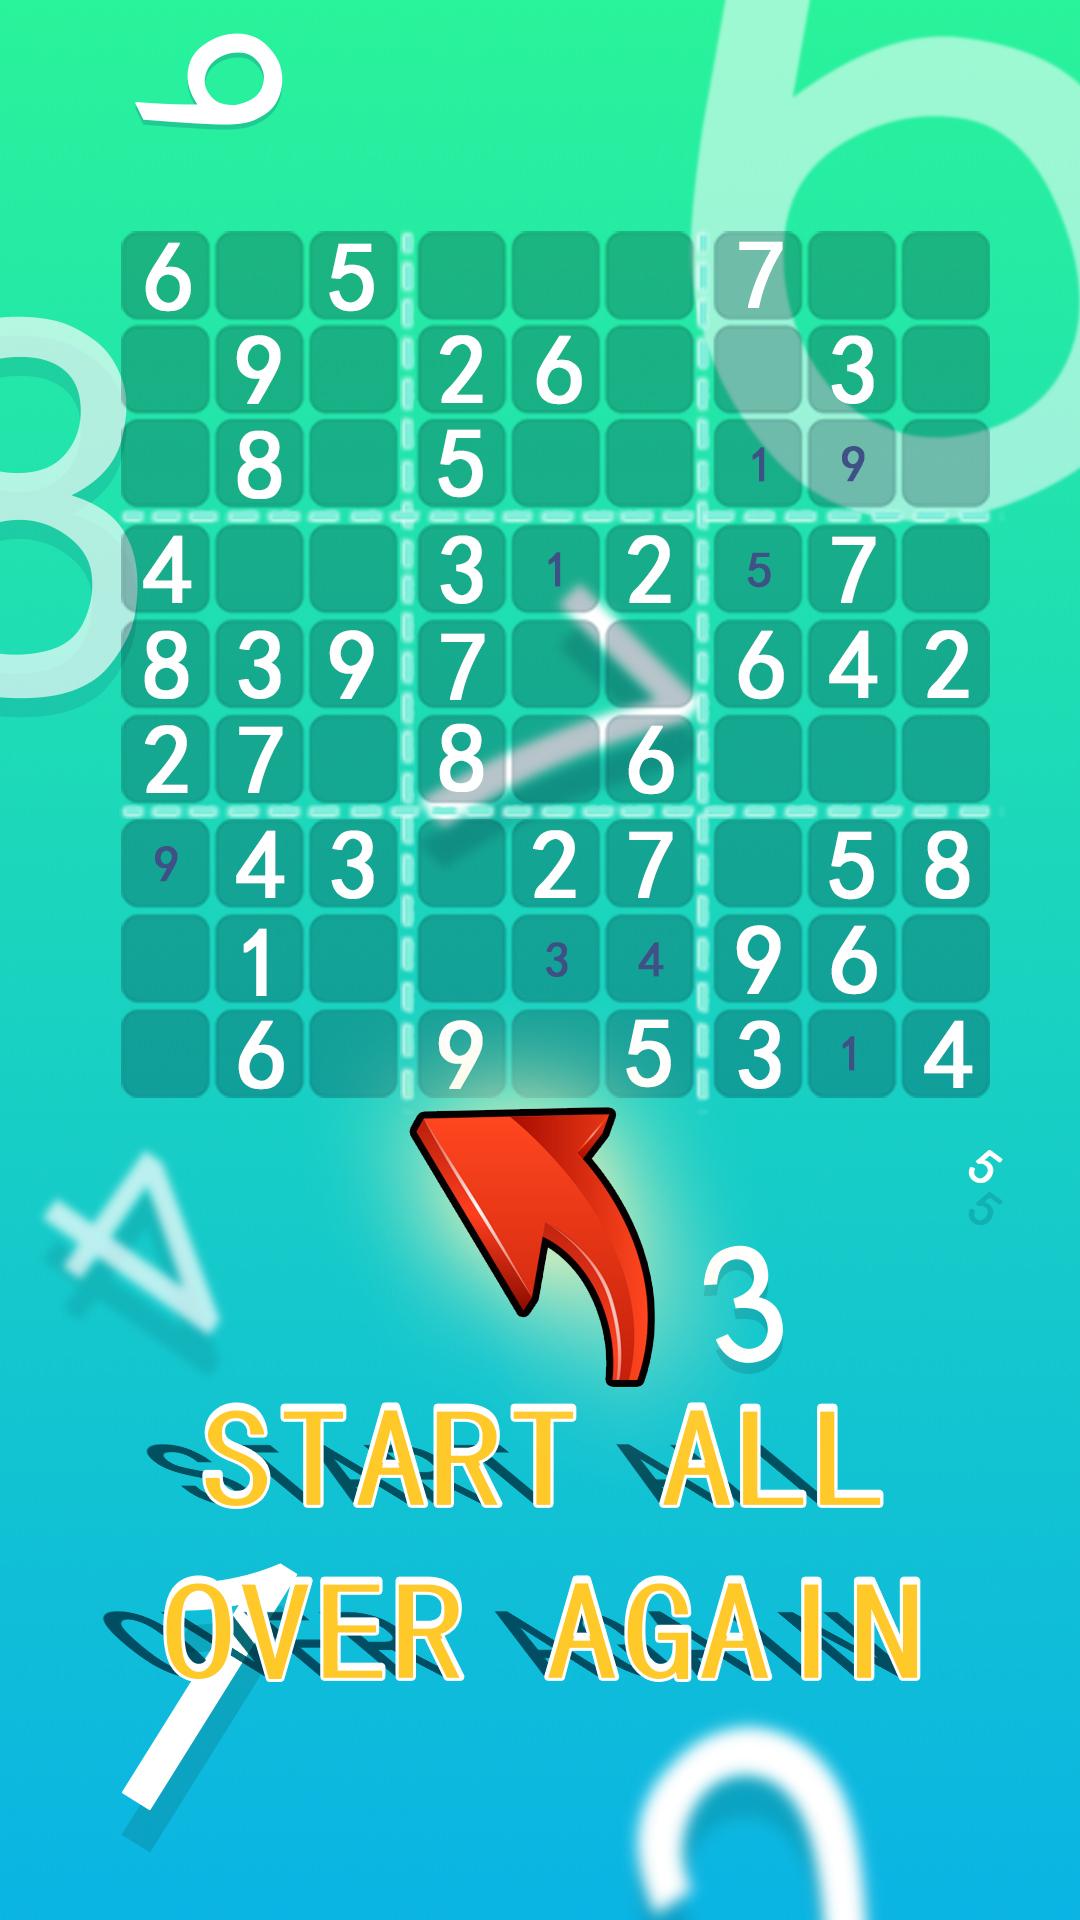 Killer Sudoku by Sudoku.com - Apps on Google Play